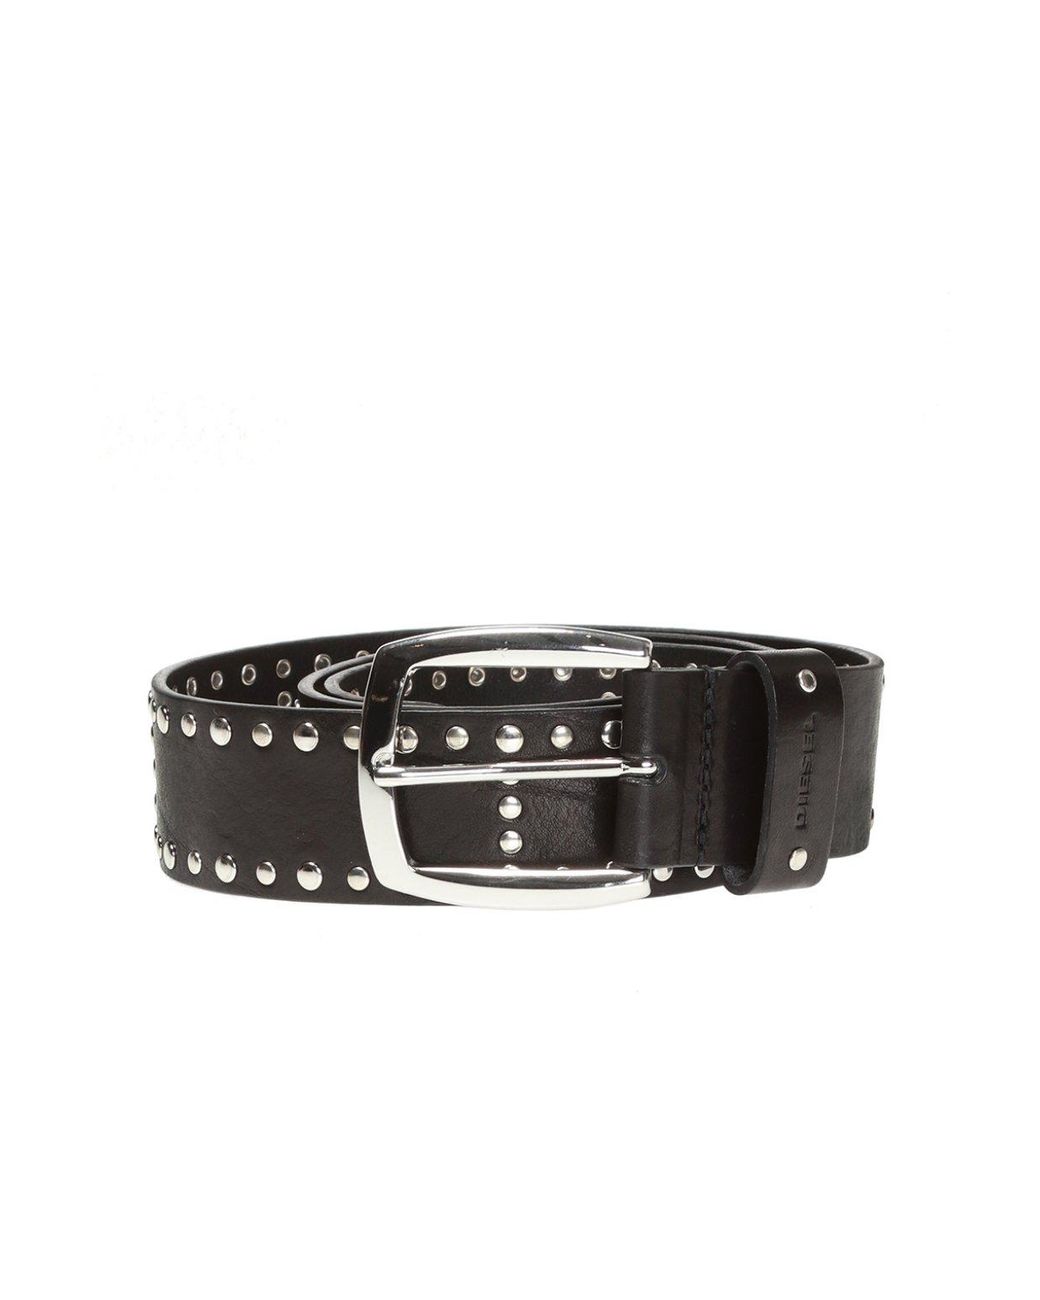 DIESEL Studded Leather Belt in Black for Men - Lyst